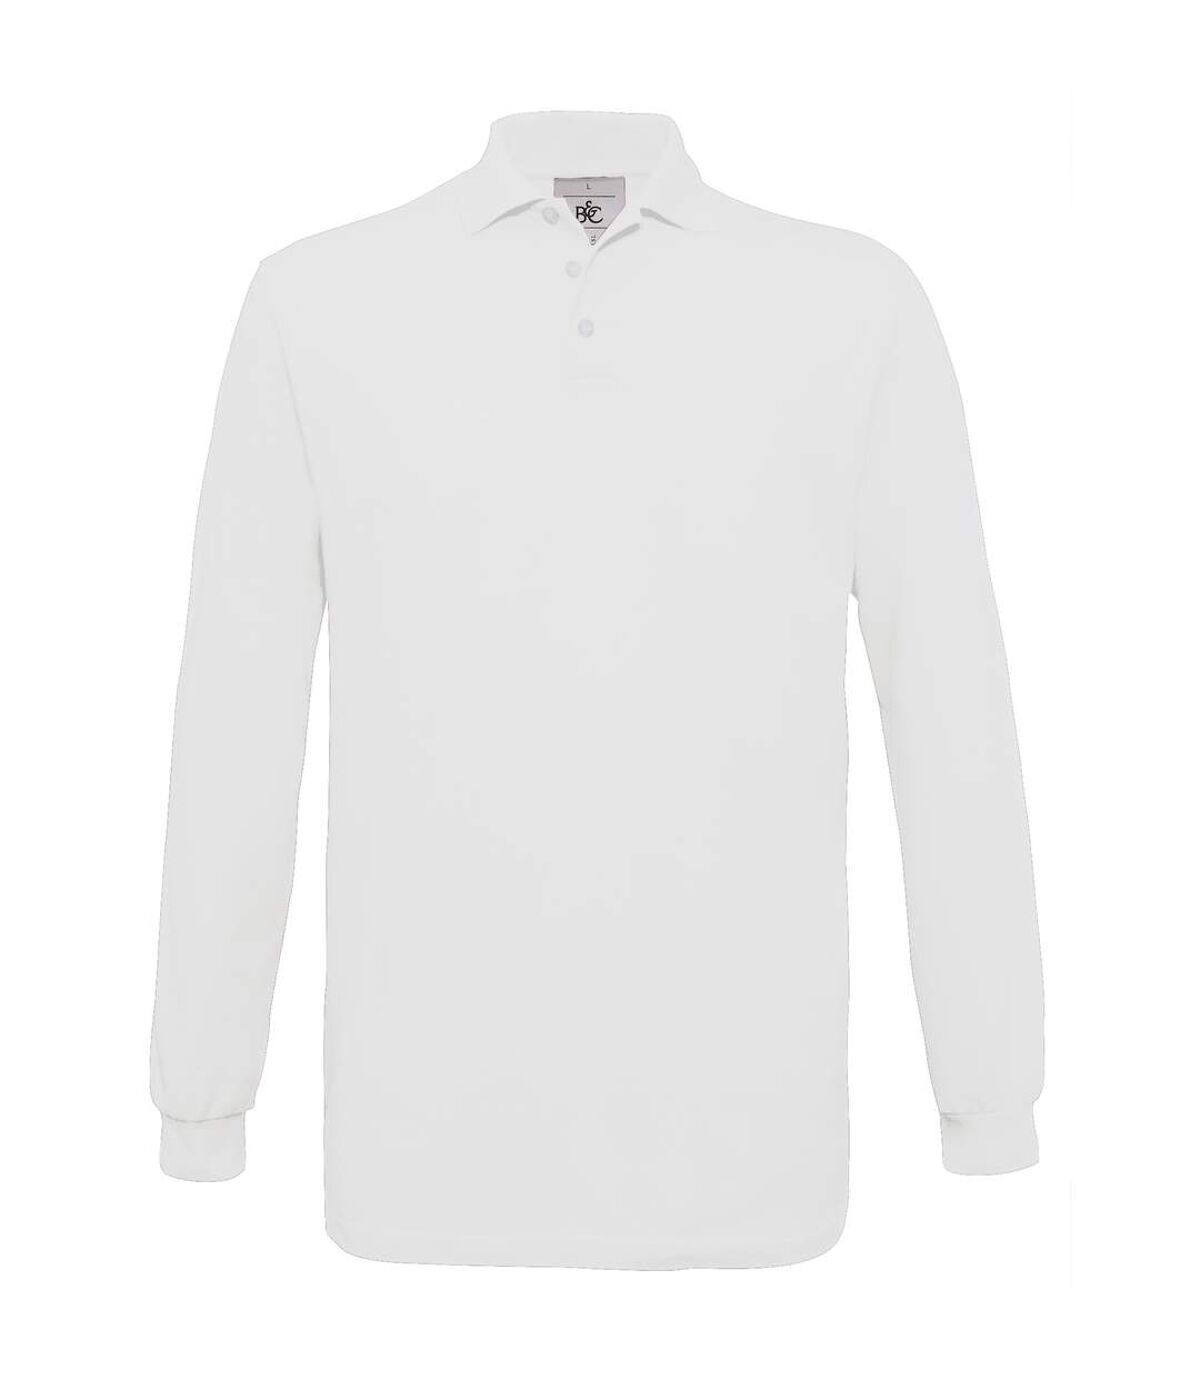 B&C Safran - Polo à manches longues - Homme (Blanc) - UTRW3005